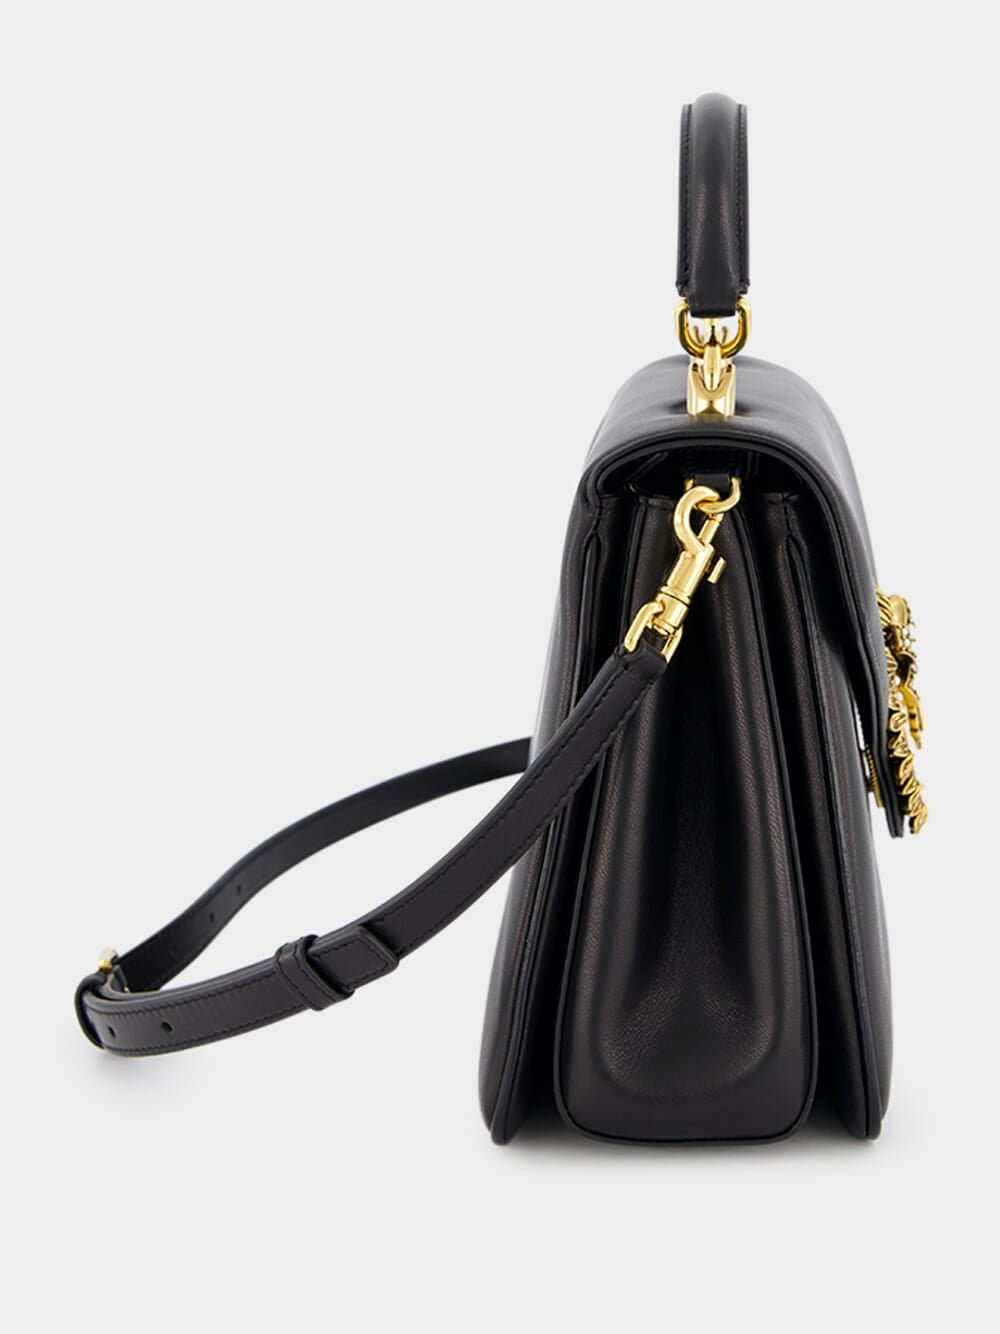 Dolce & GabbanaDevotion Leather Handbag at Fashion Clinic